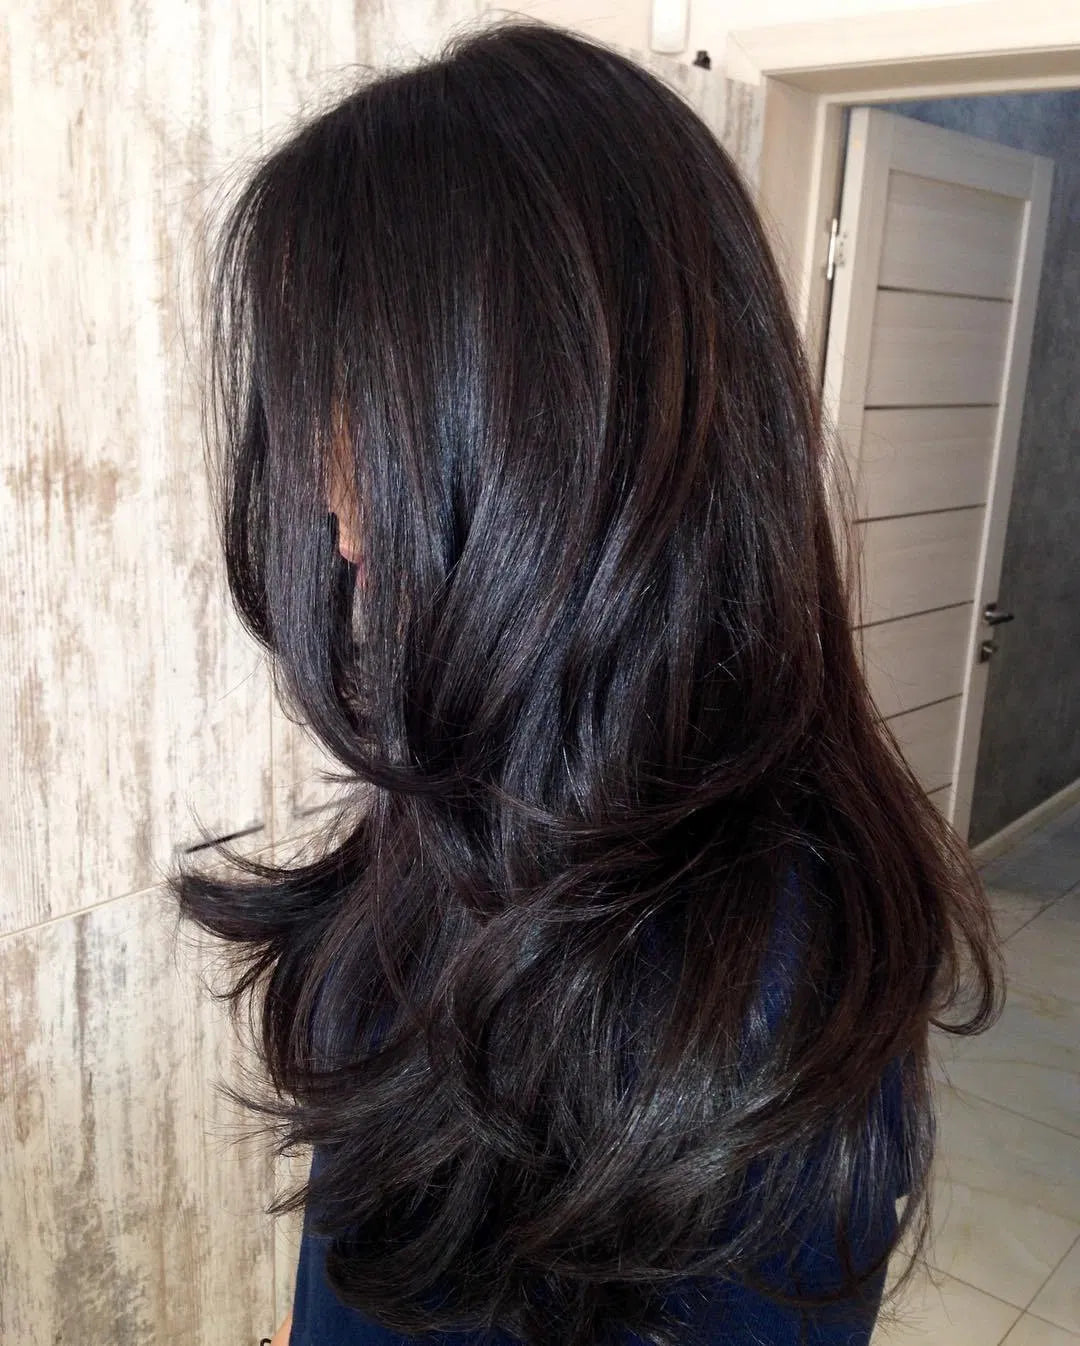 Loreal Paris Excellence Creme Hair color in shade No 3 Dark brown   Devikalad  YouTube